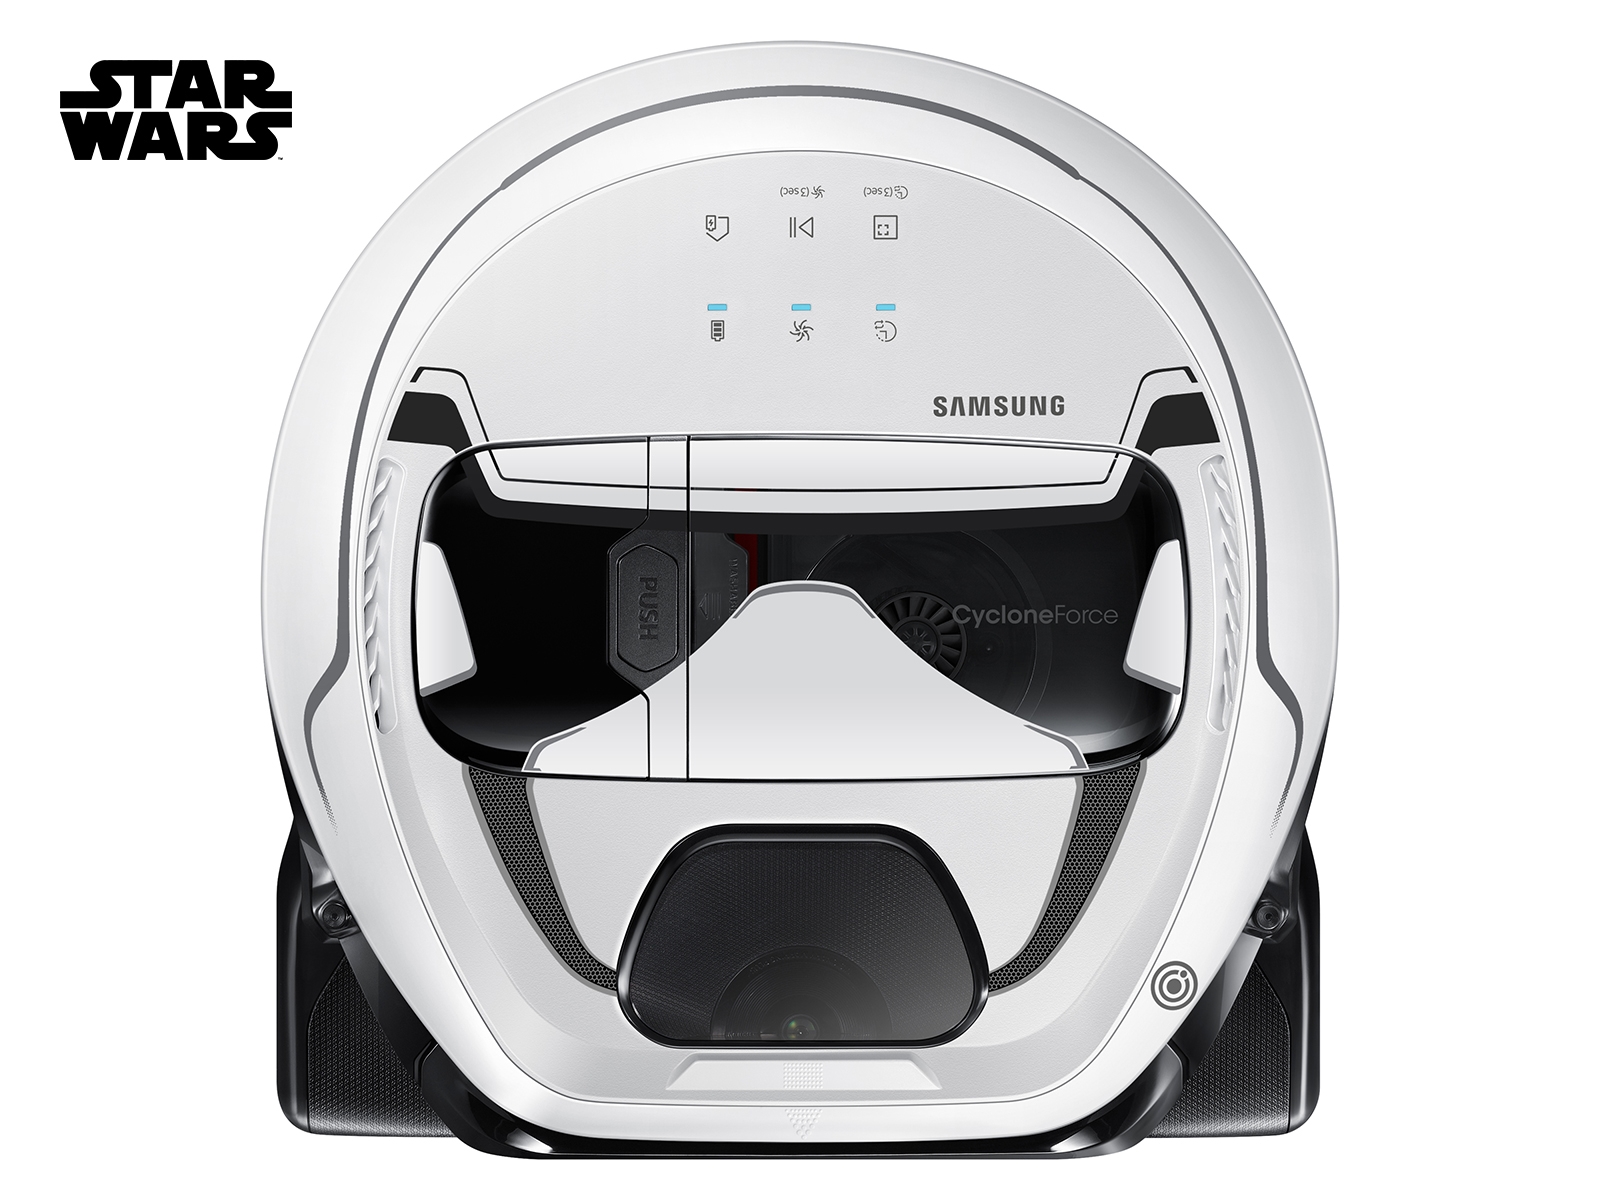 Star Wars Stormtrooper Robot VR1AM7010U5 | Samsung US